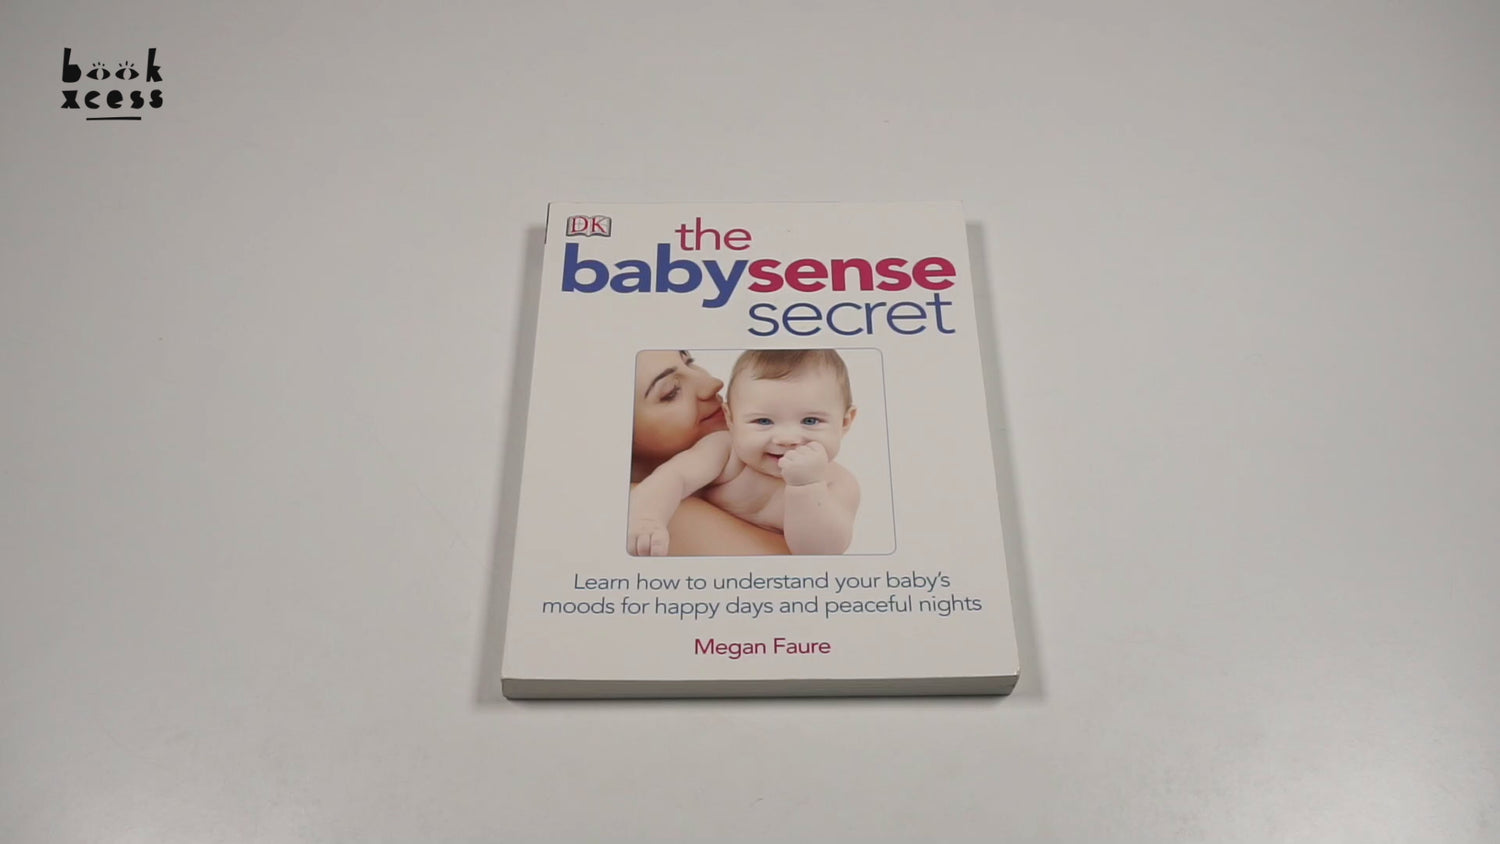 The Babysense Secret by Megan Faure